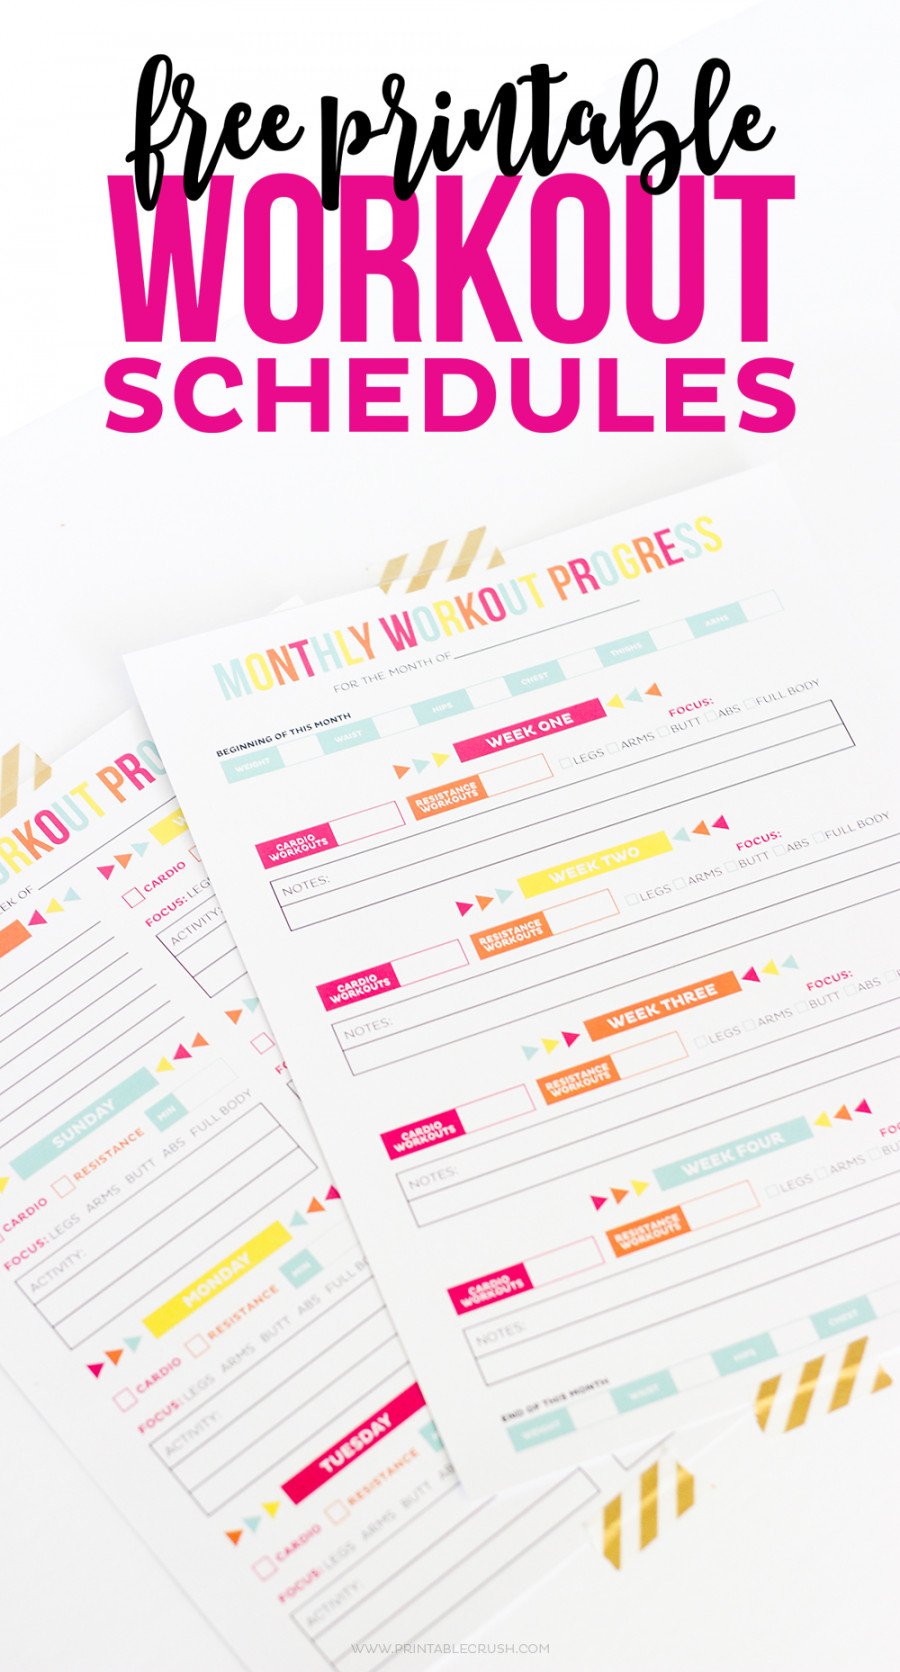 Workout Calendar - FREE Printable Schedule/Progress Sheets